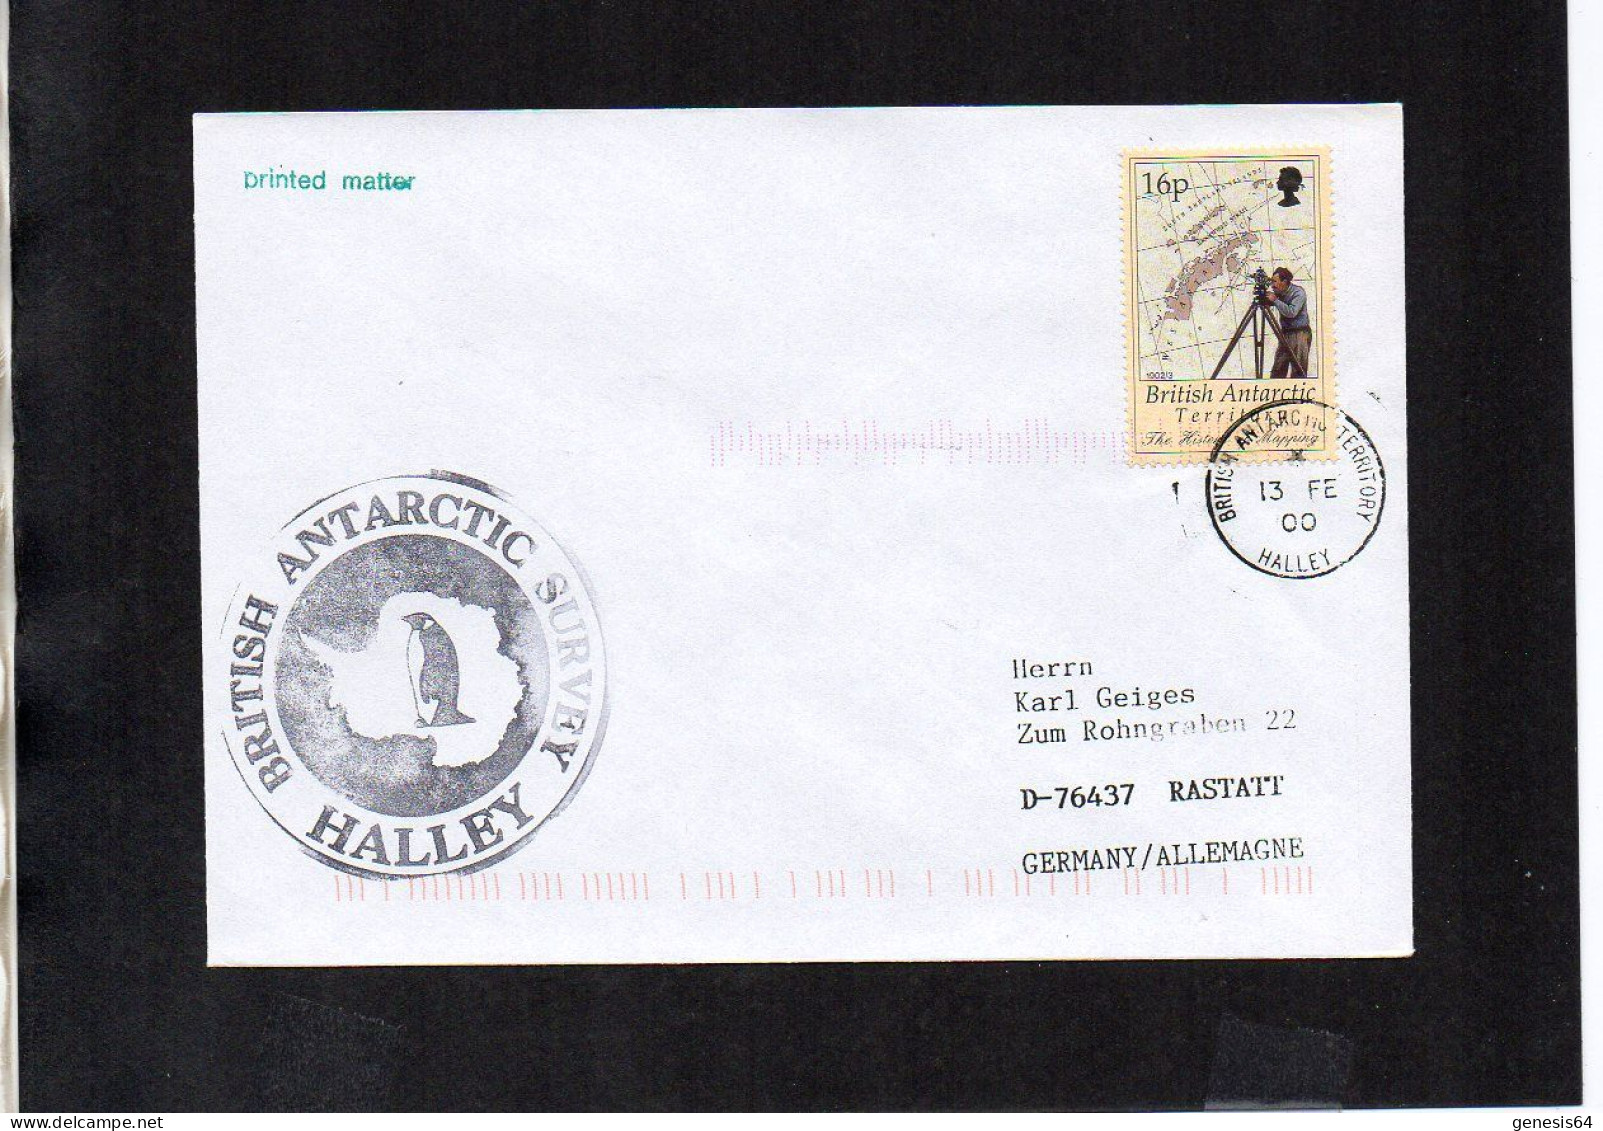 British Antarctic Territory (BAT) 2000 Cover - Halley 13 FE 00 - (1ATK023) - Lettres & Documents